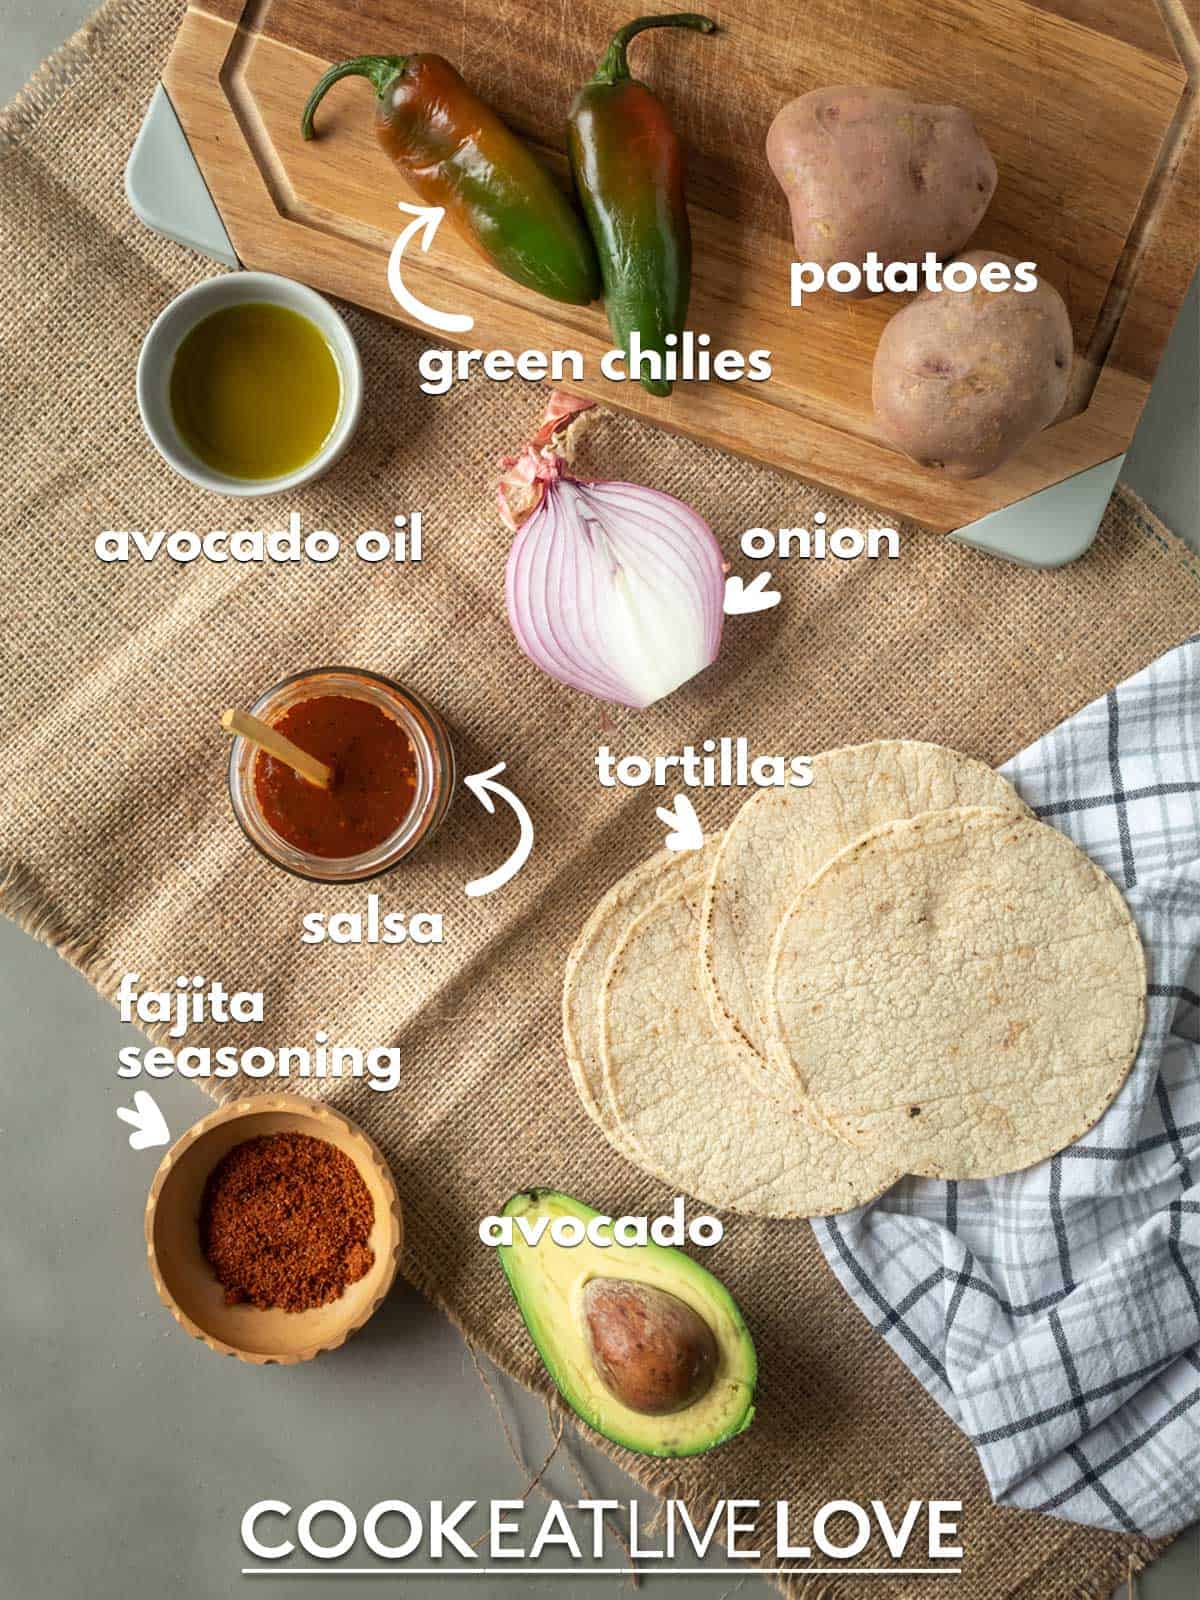 Ingredients to make vegan potato tacos on the table